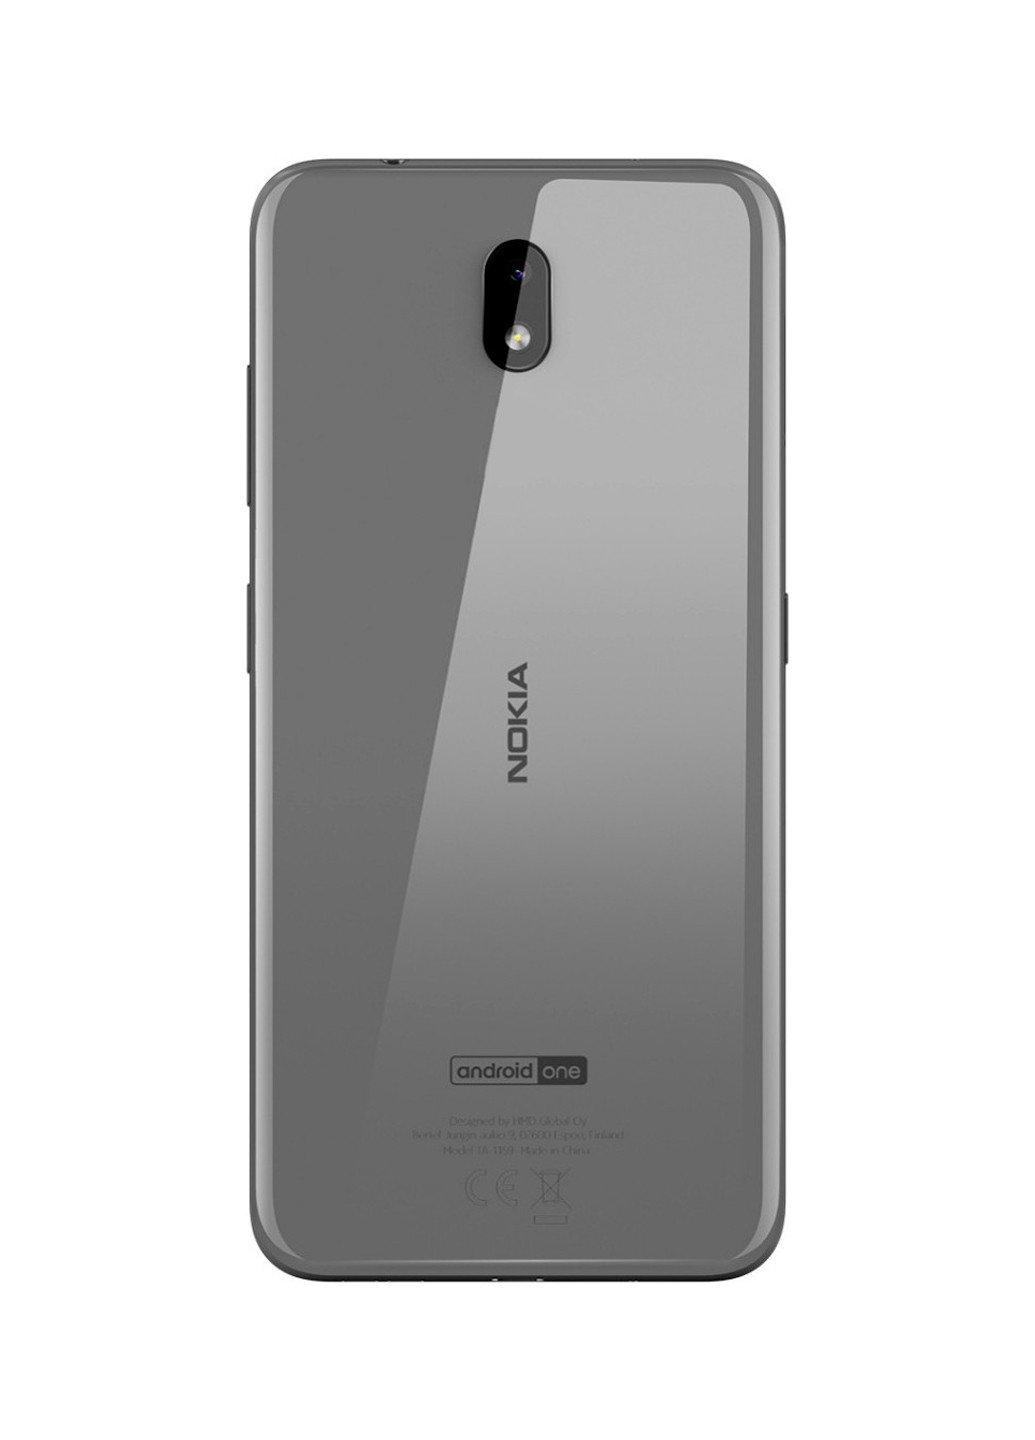 Смартфон 3.2 2 / 16Gb DS Grey Nokia 3.2 2/16gb ds grey (148386211)